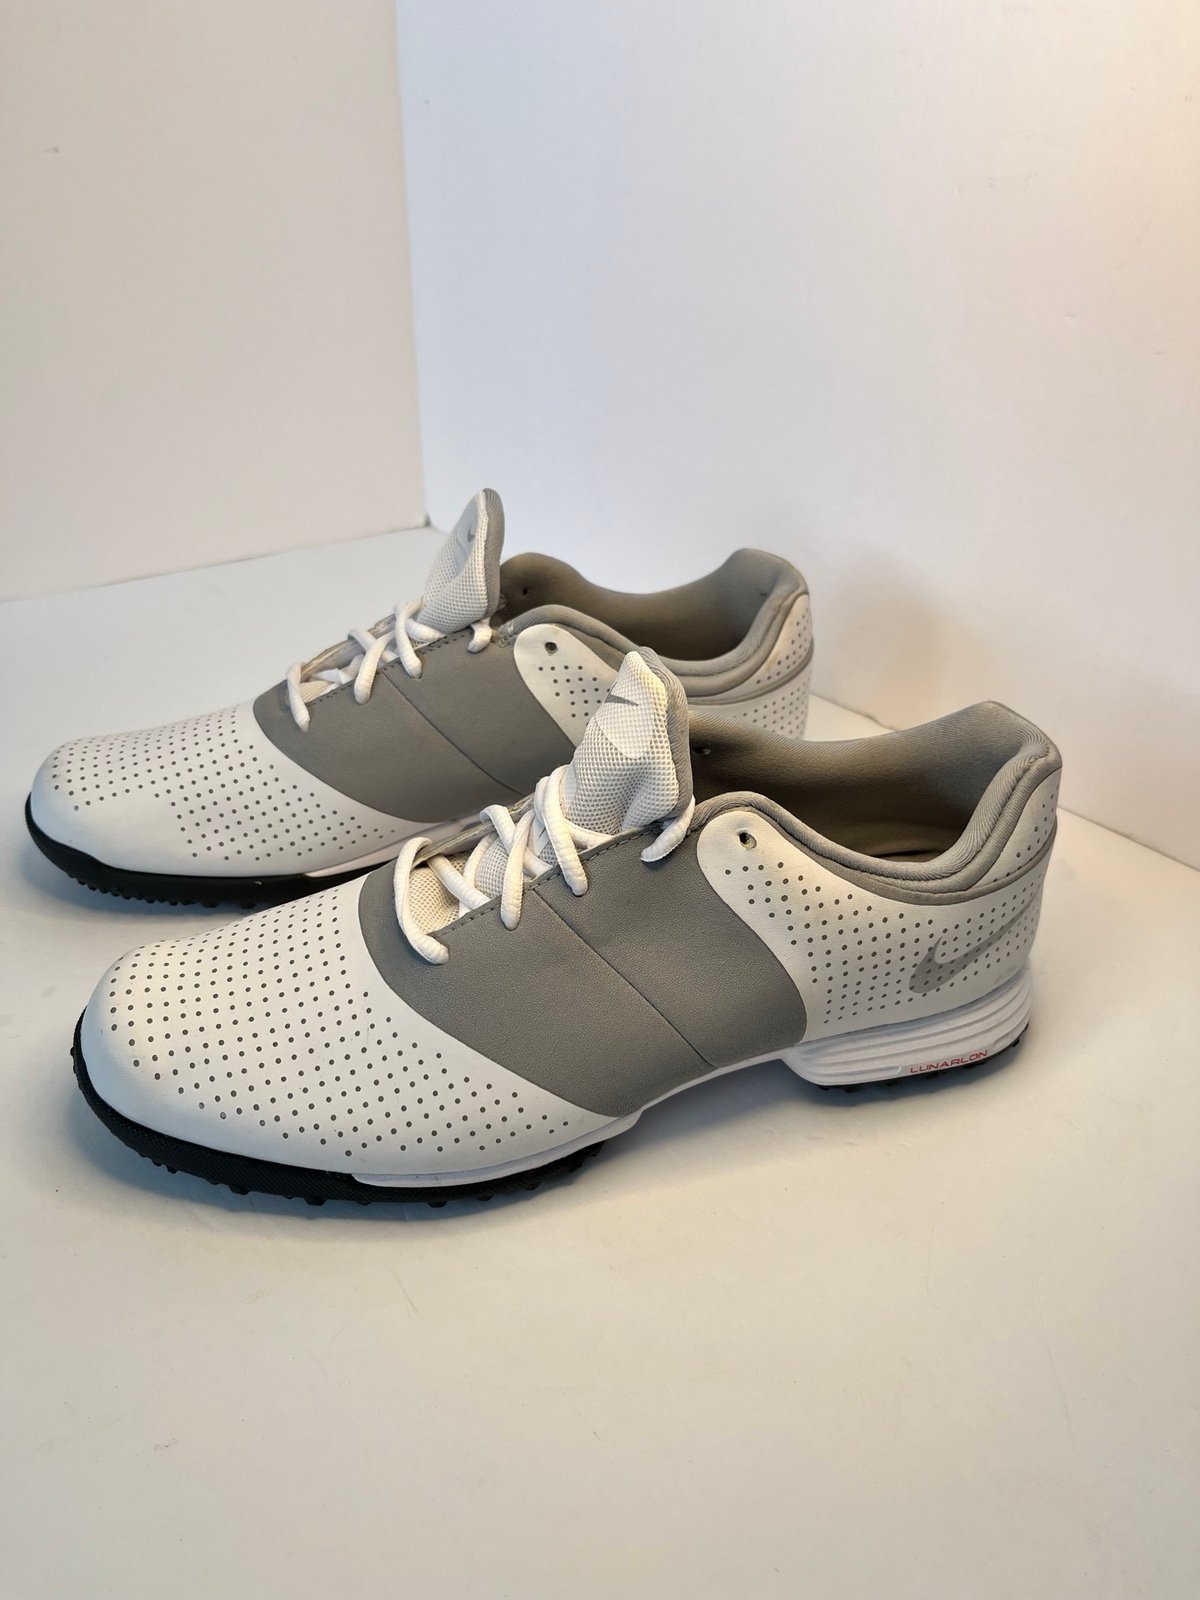 Nike Golf Shoes Womens US 8.5 White Gray Lunarlon Soft Cleats Lace-Up 612662-001 Kxe34bR0V